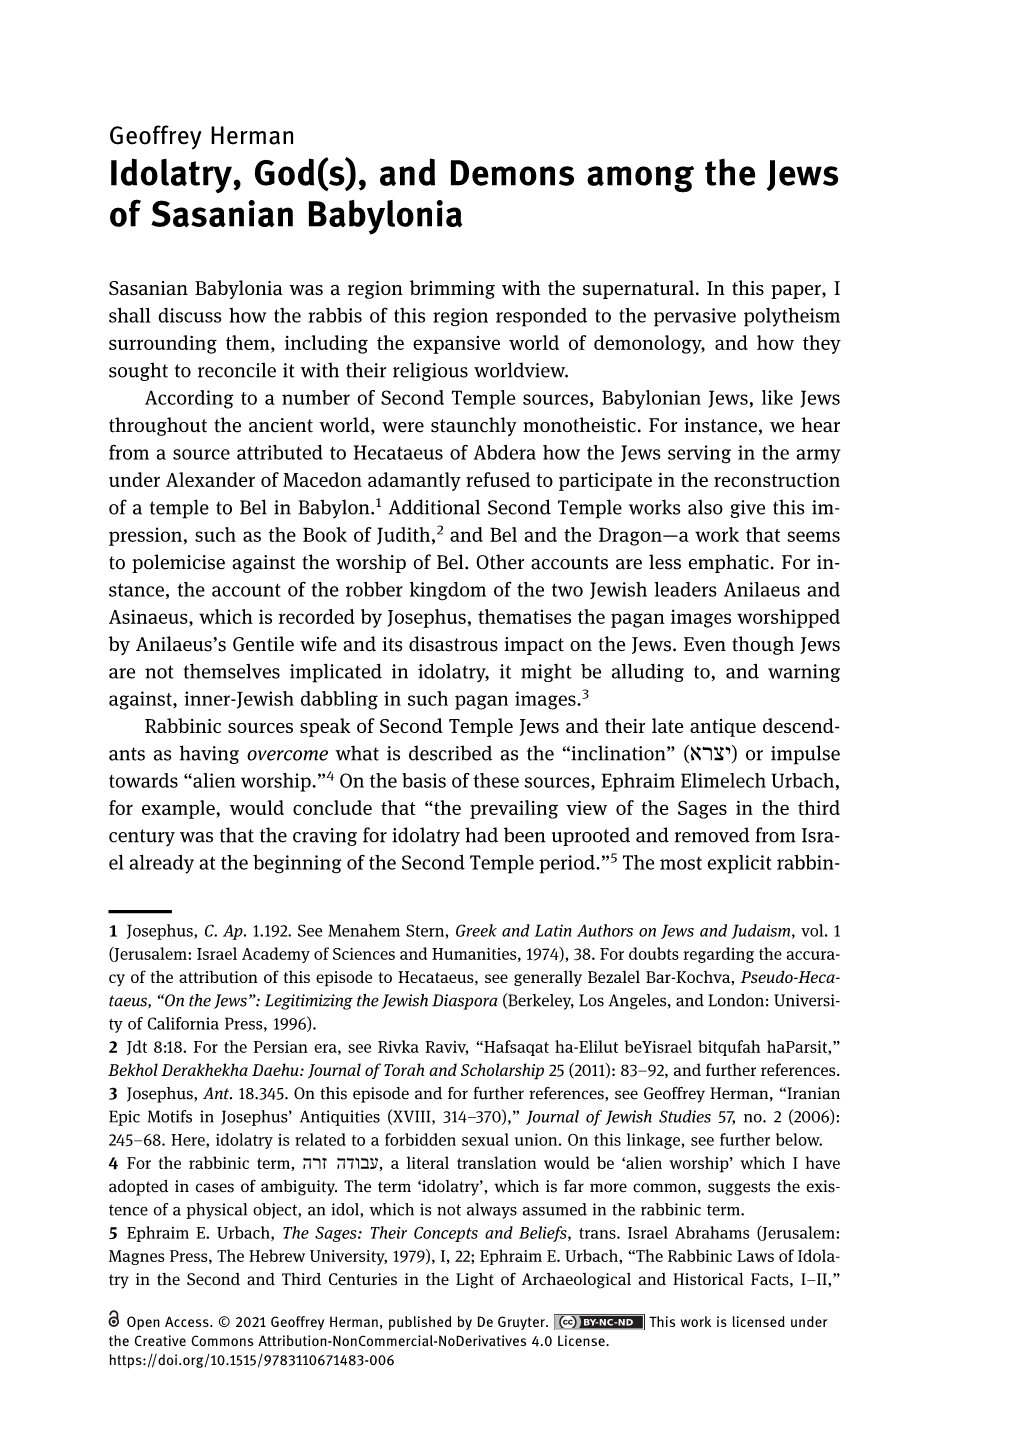 Idolatry, God(S), and Demons Among the Jews of Sasanian Babylonia